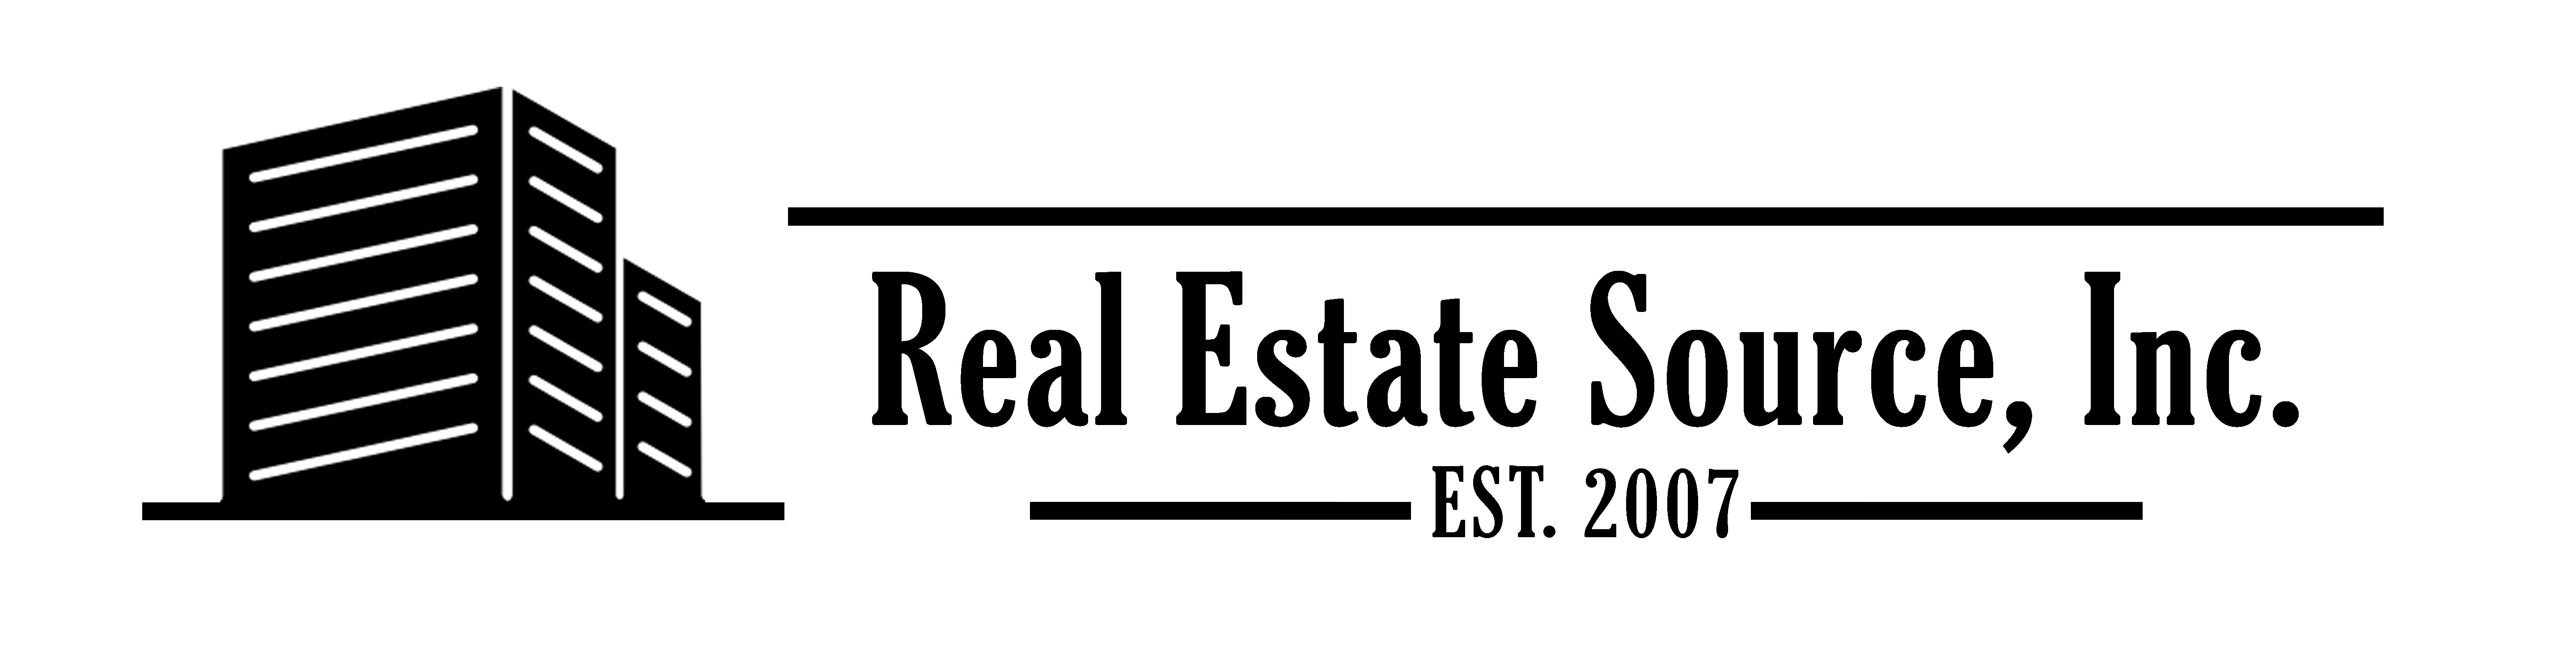 Real Estate Source, Inc